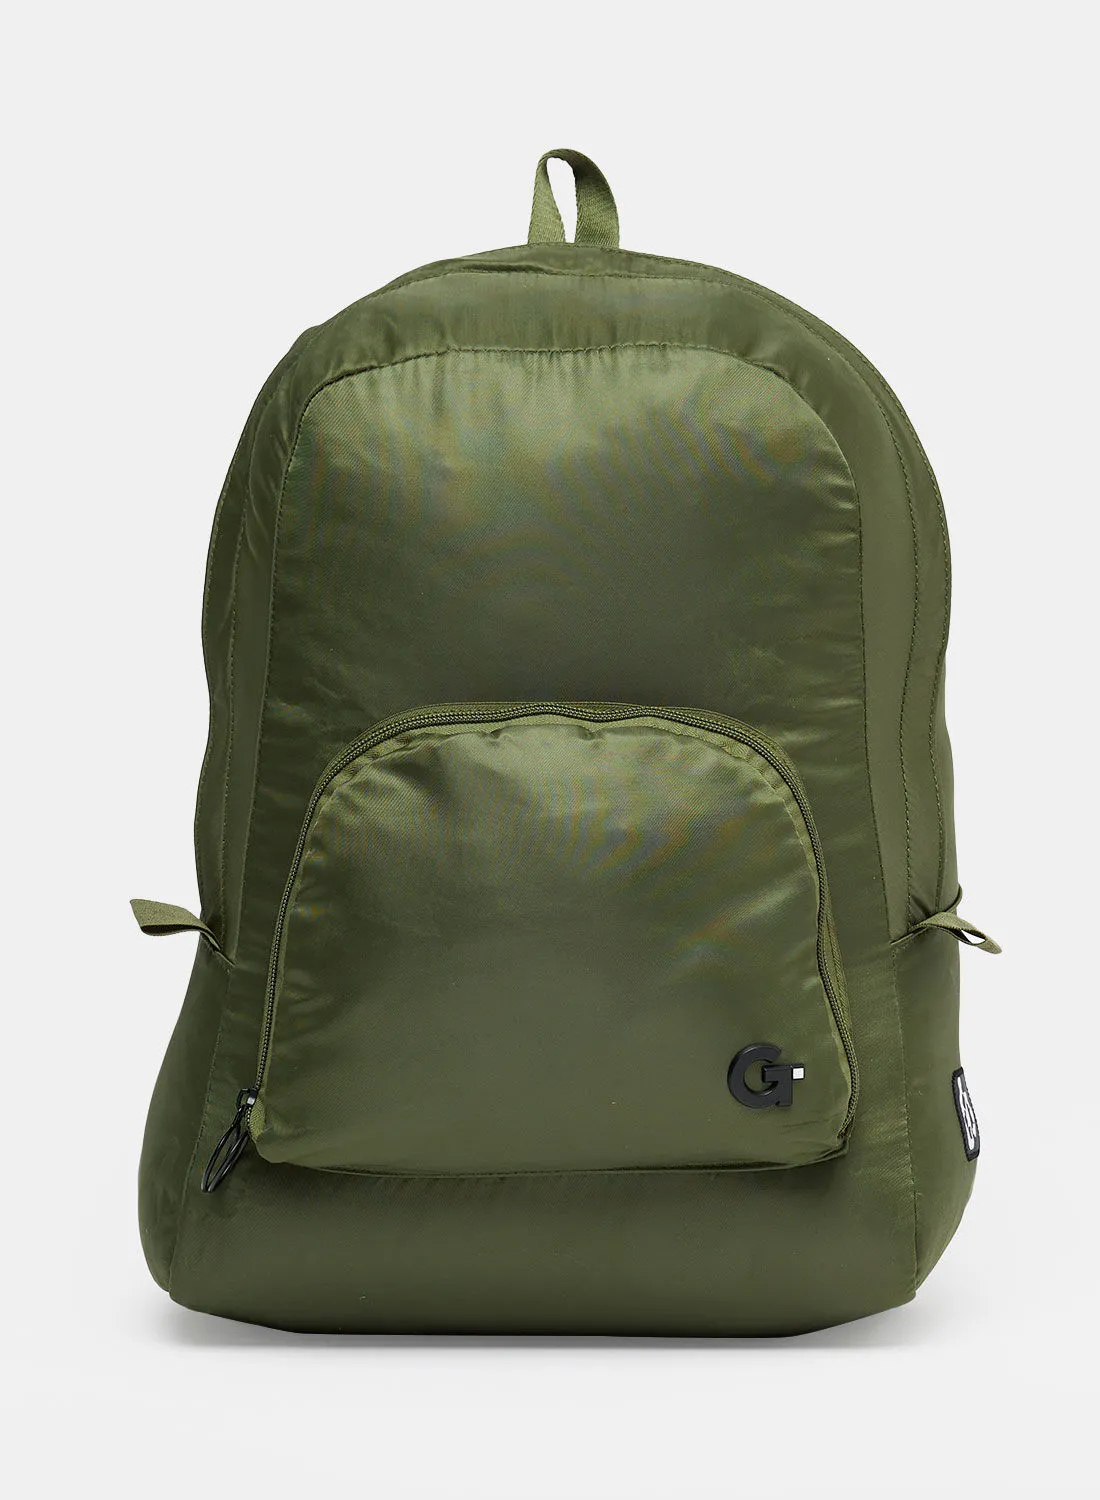 Goodtimes Sydney Packaway Backpack Green